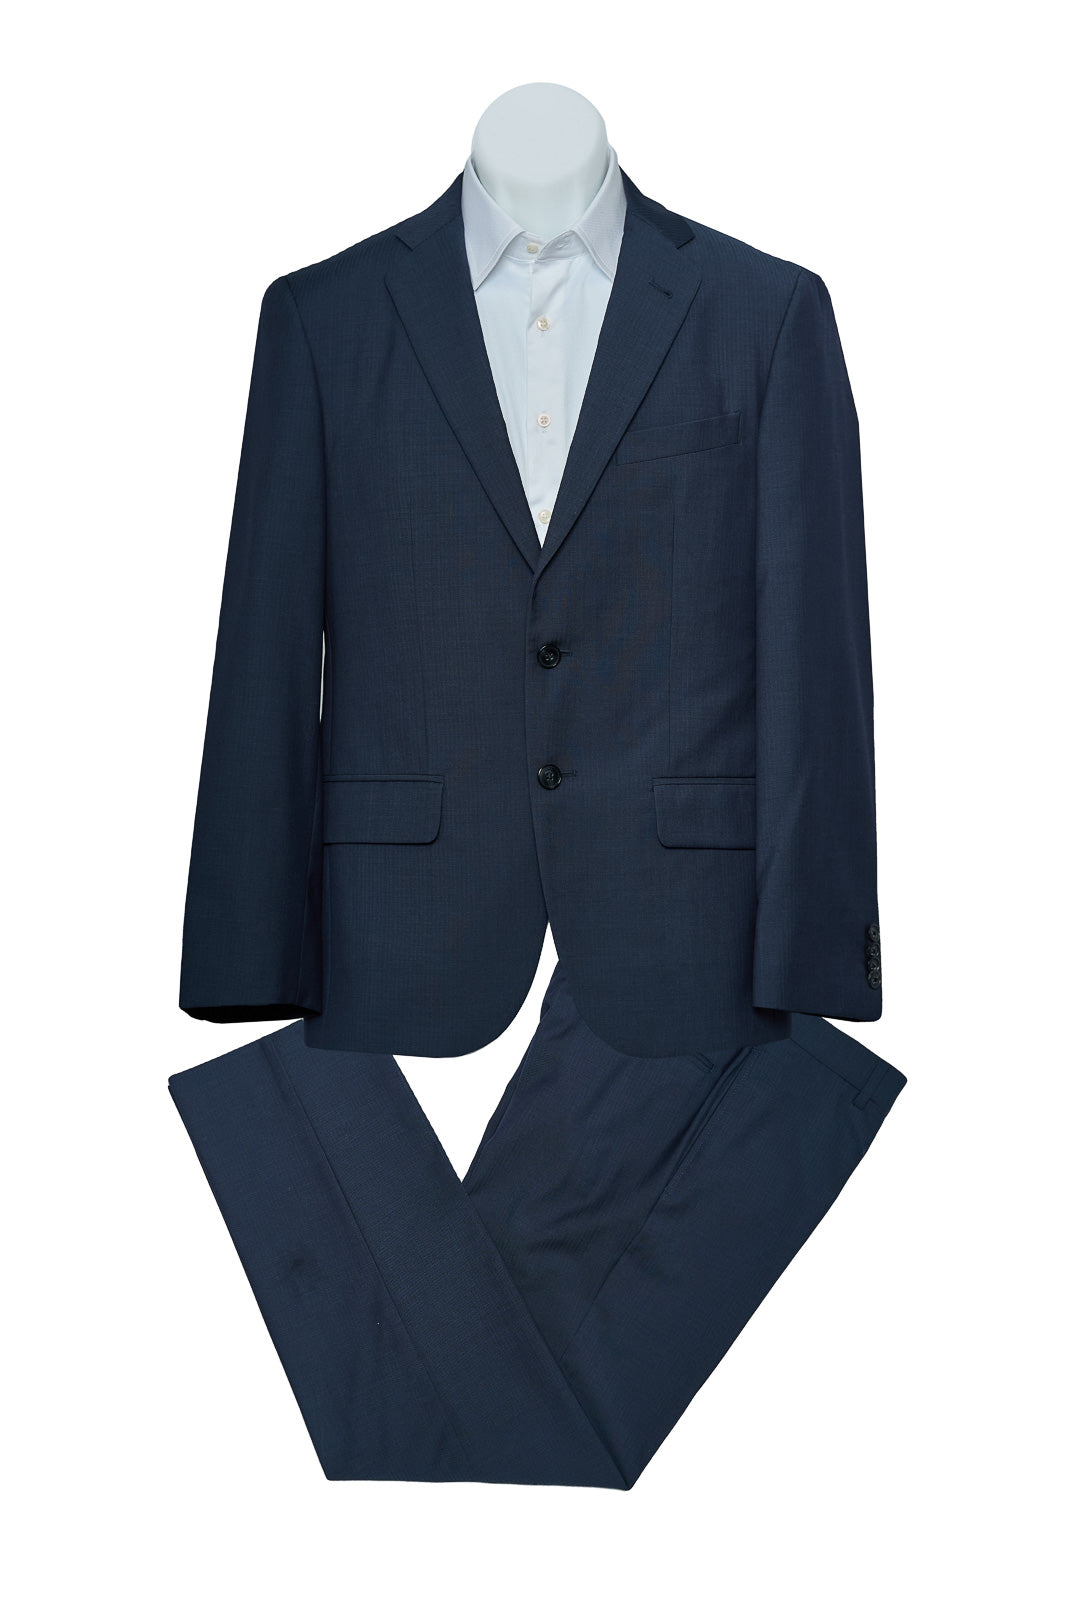 Litmus Navy Classic Suit